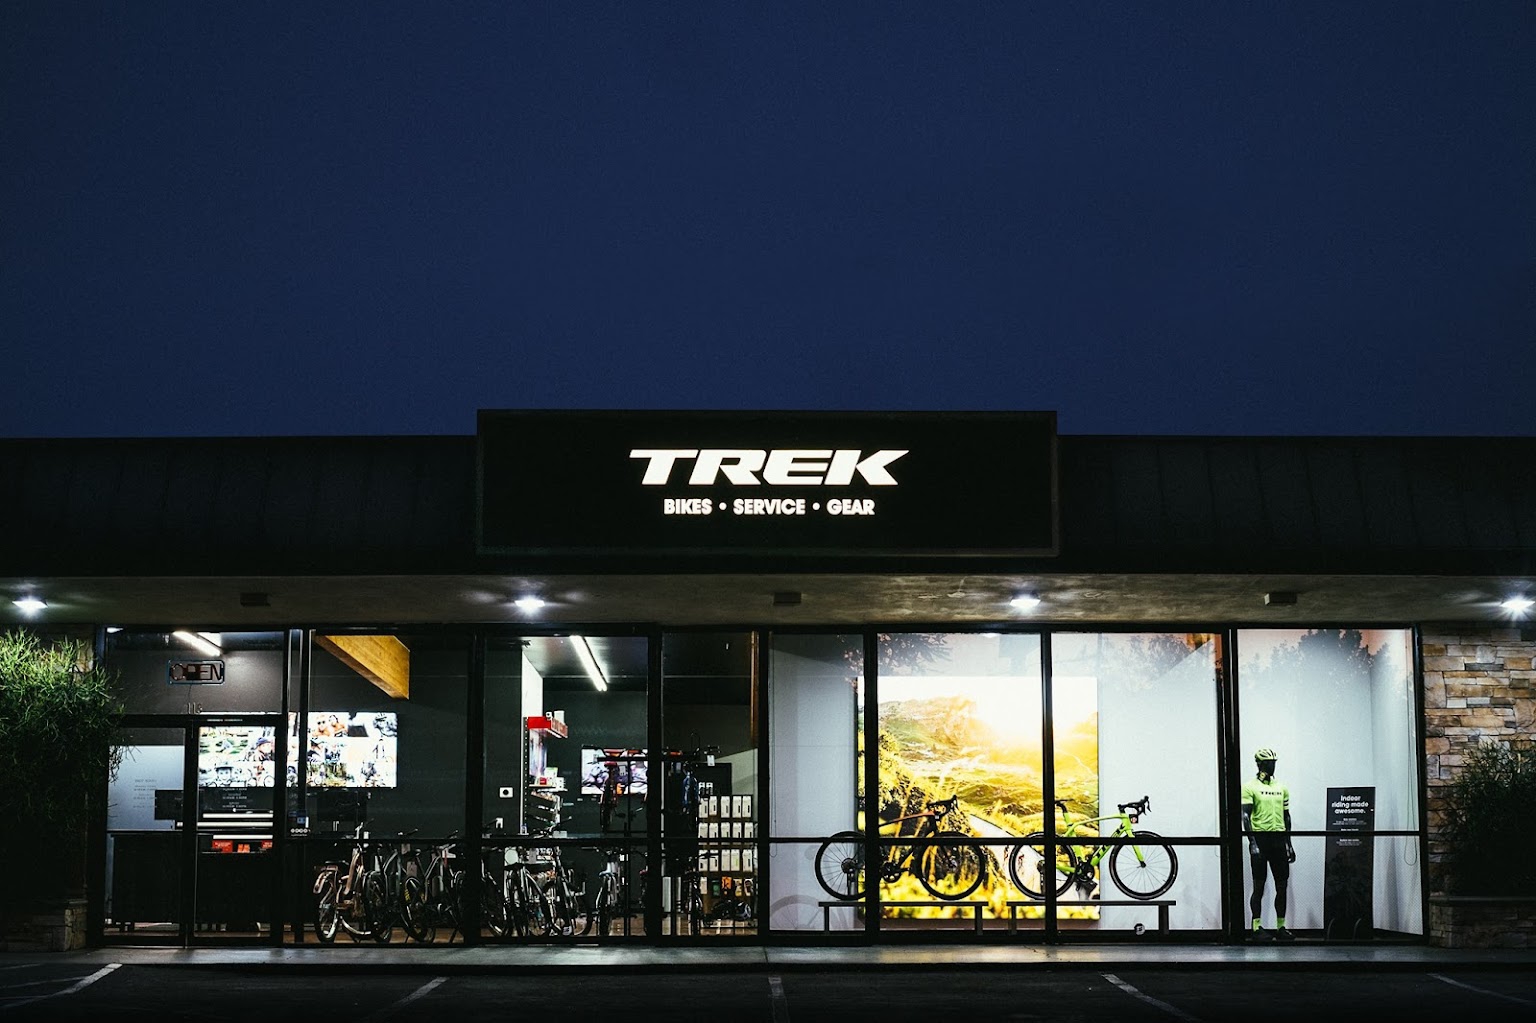 trek bicycle store near me